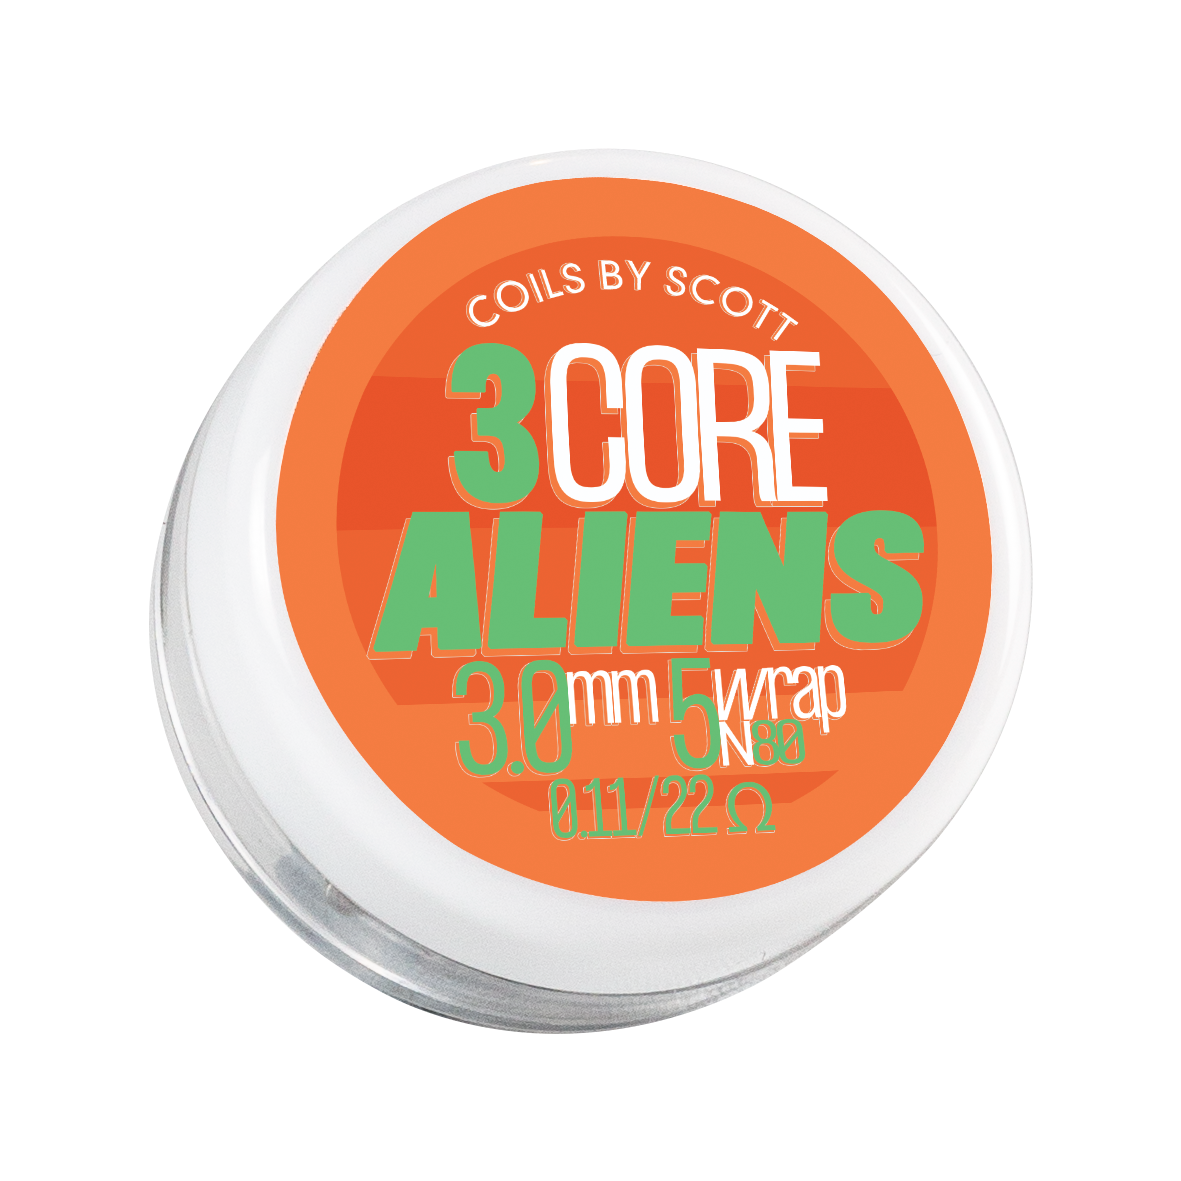 0.11 3 Core Aliens